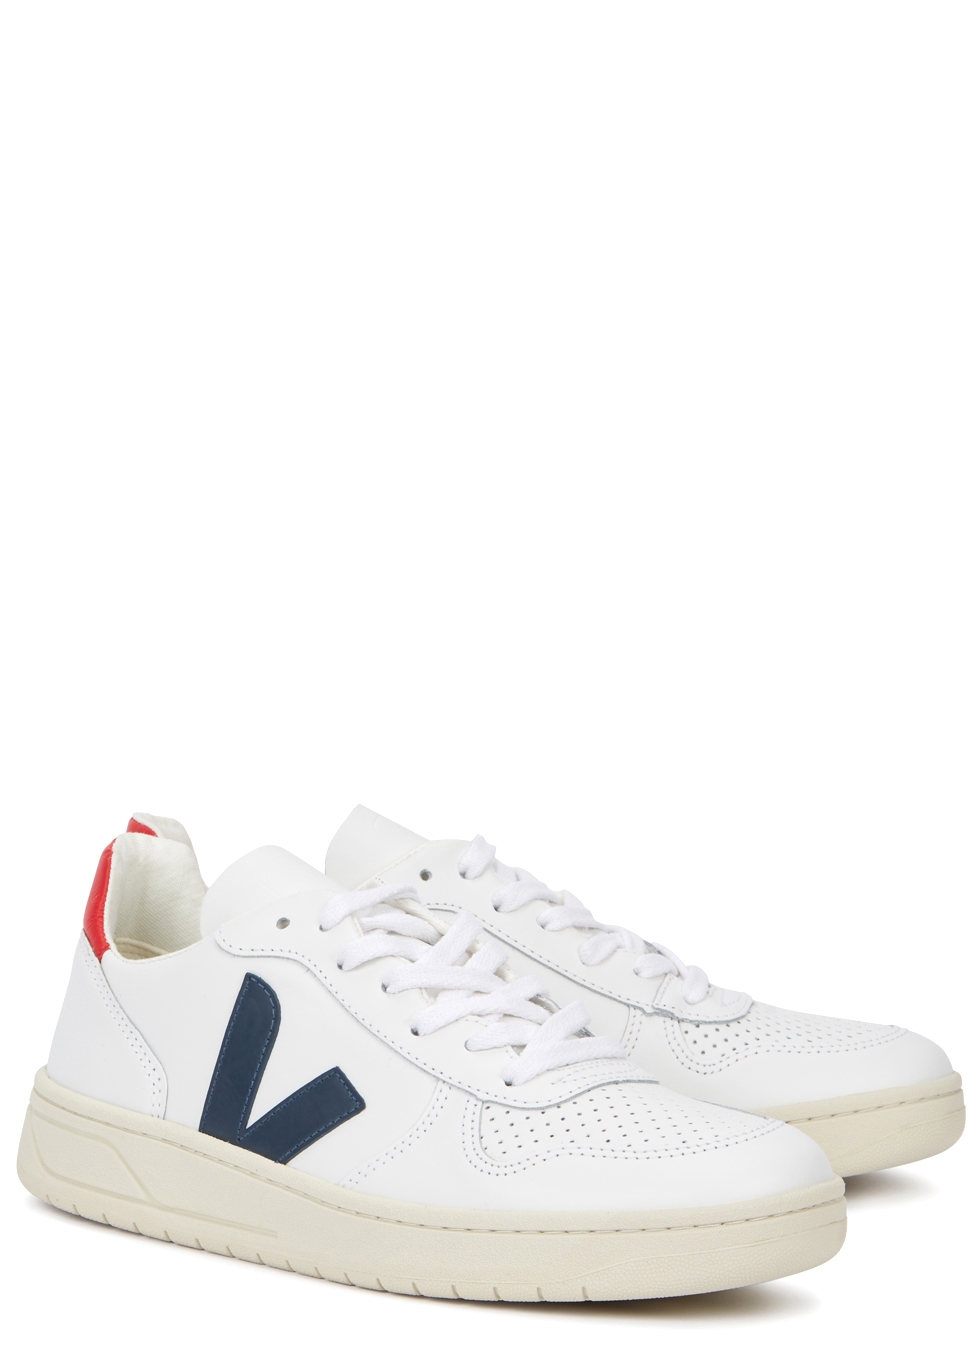 Veja V-10 white leather sneakers 